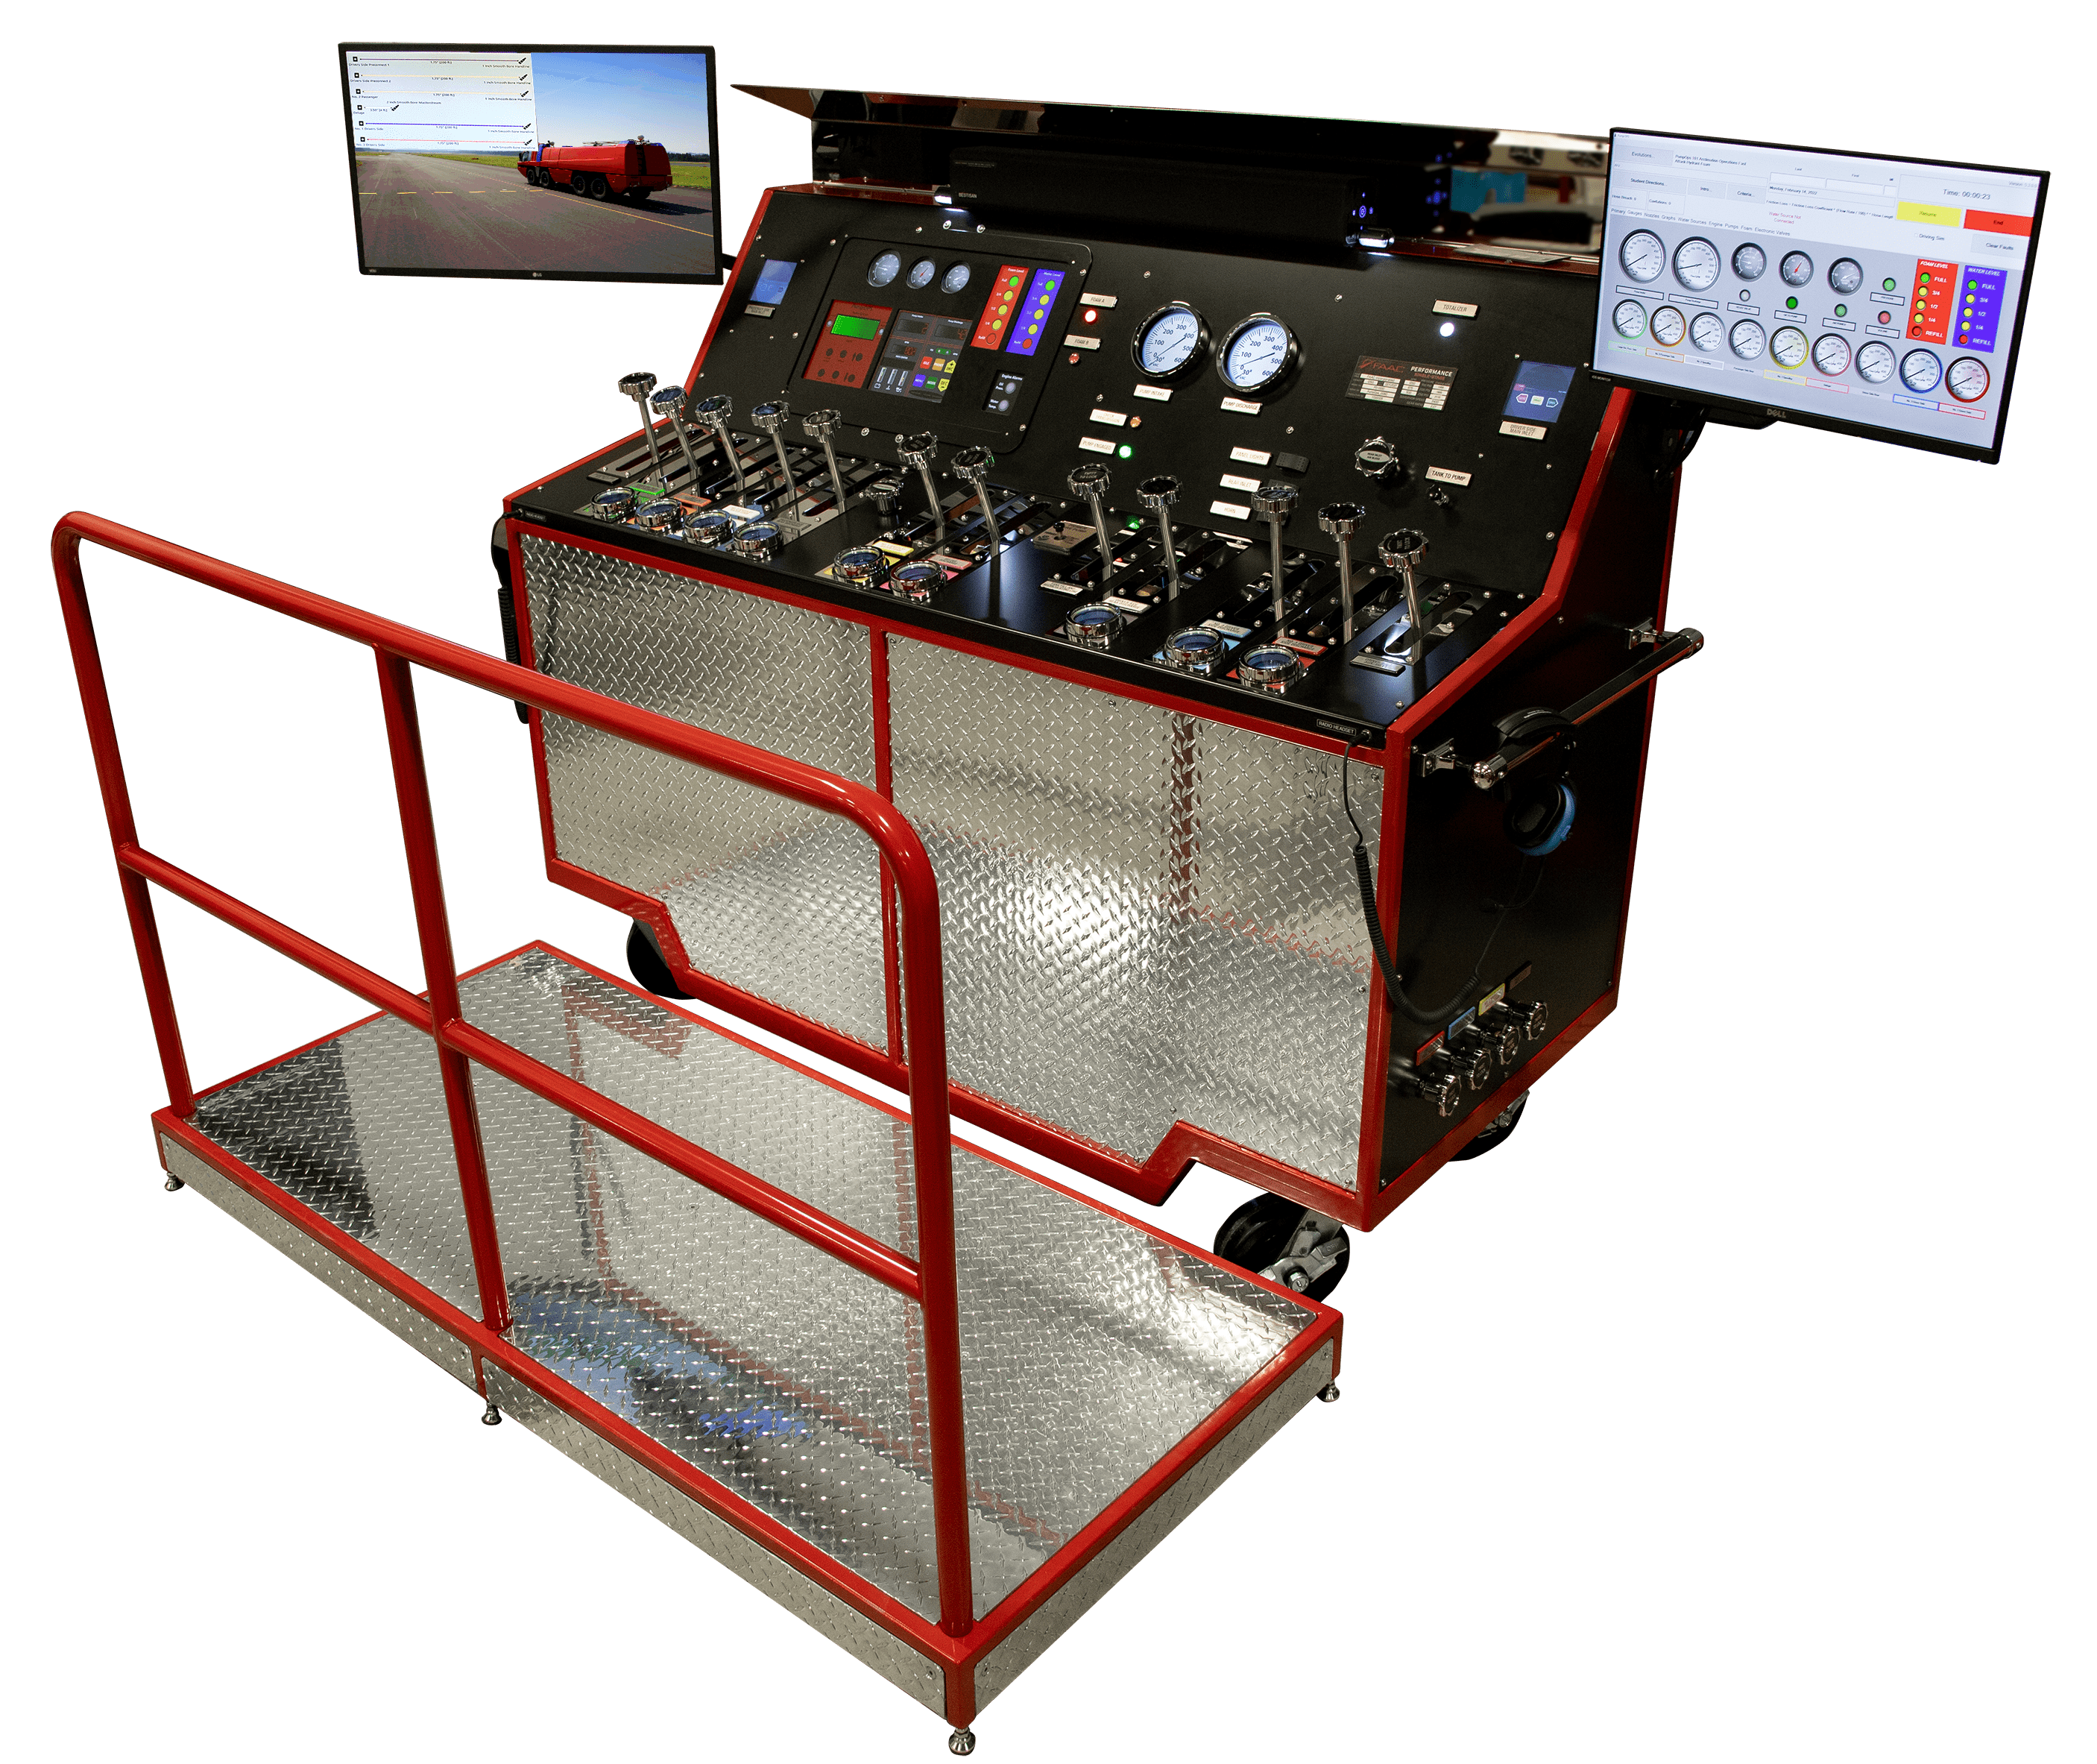 reactie Dreigend Schijn Fire Engine Pump Simulator - DoD Fire Pump Simulator - FAAC